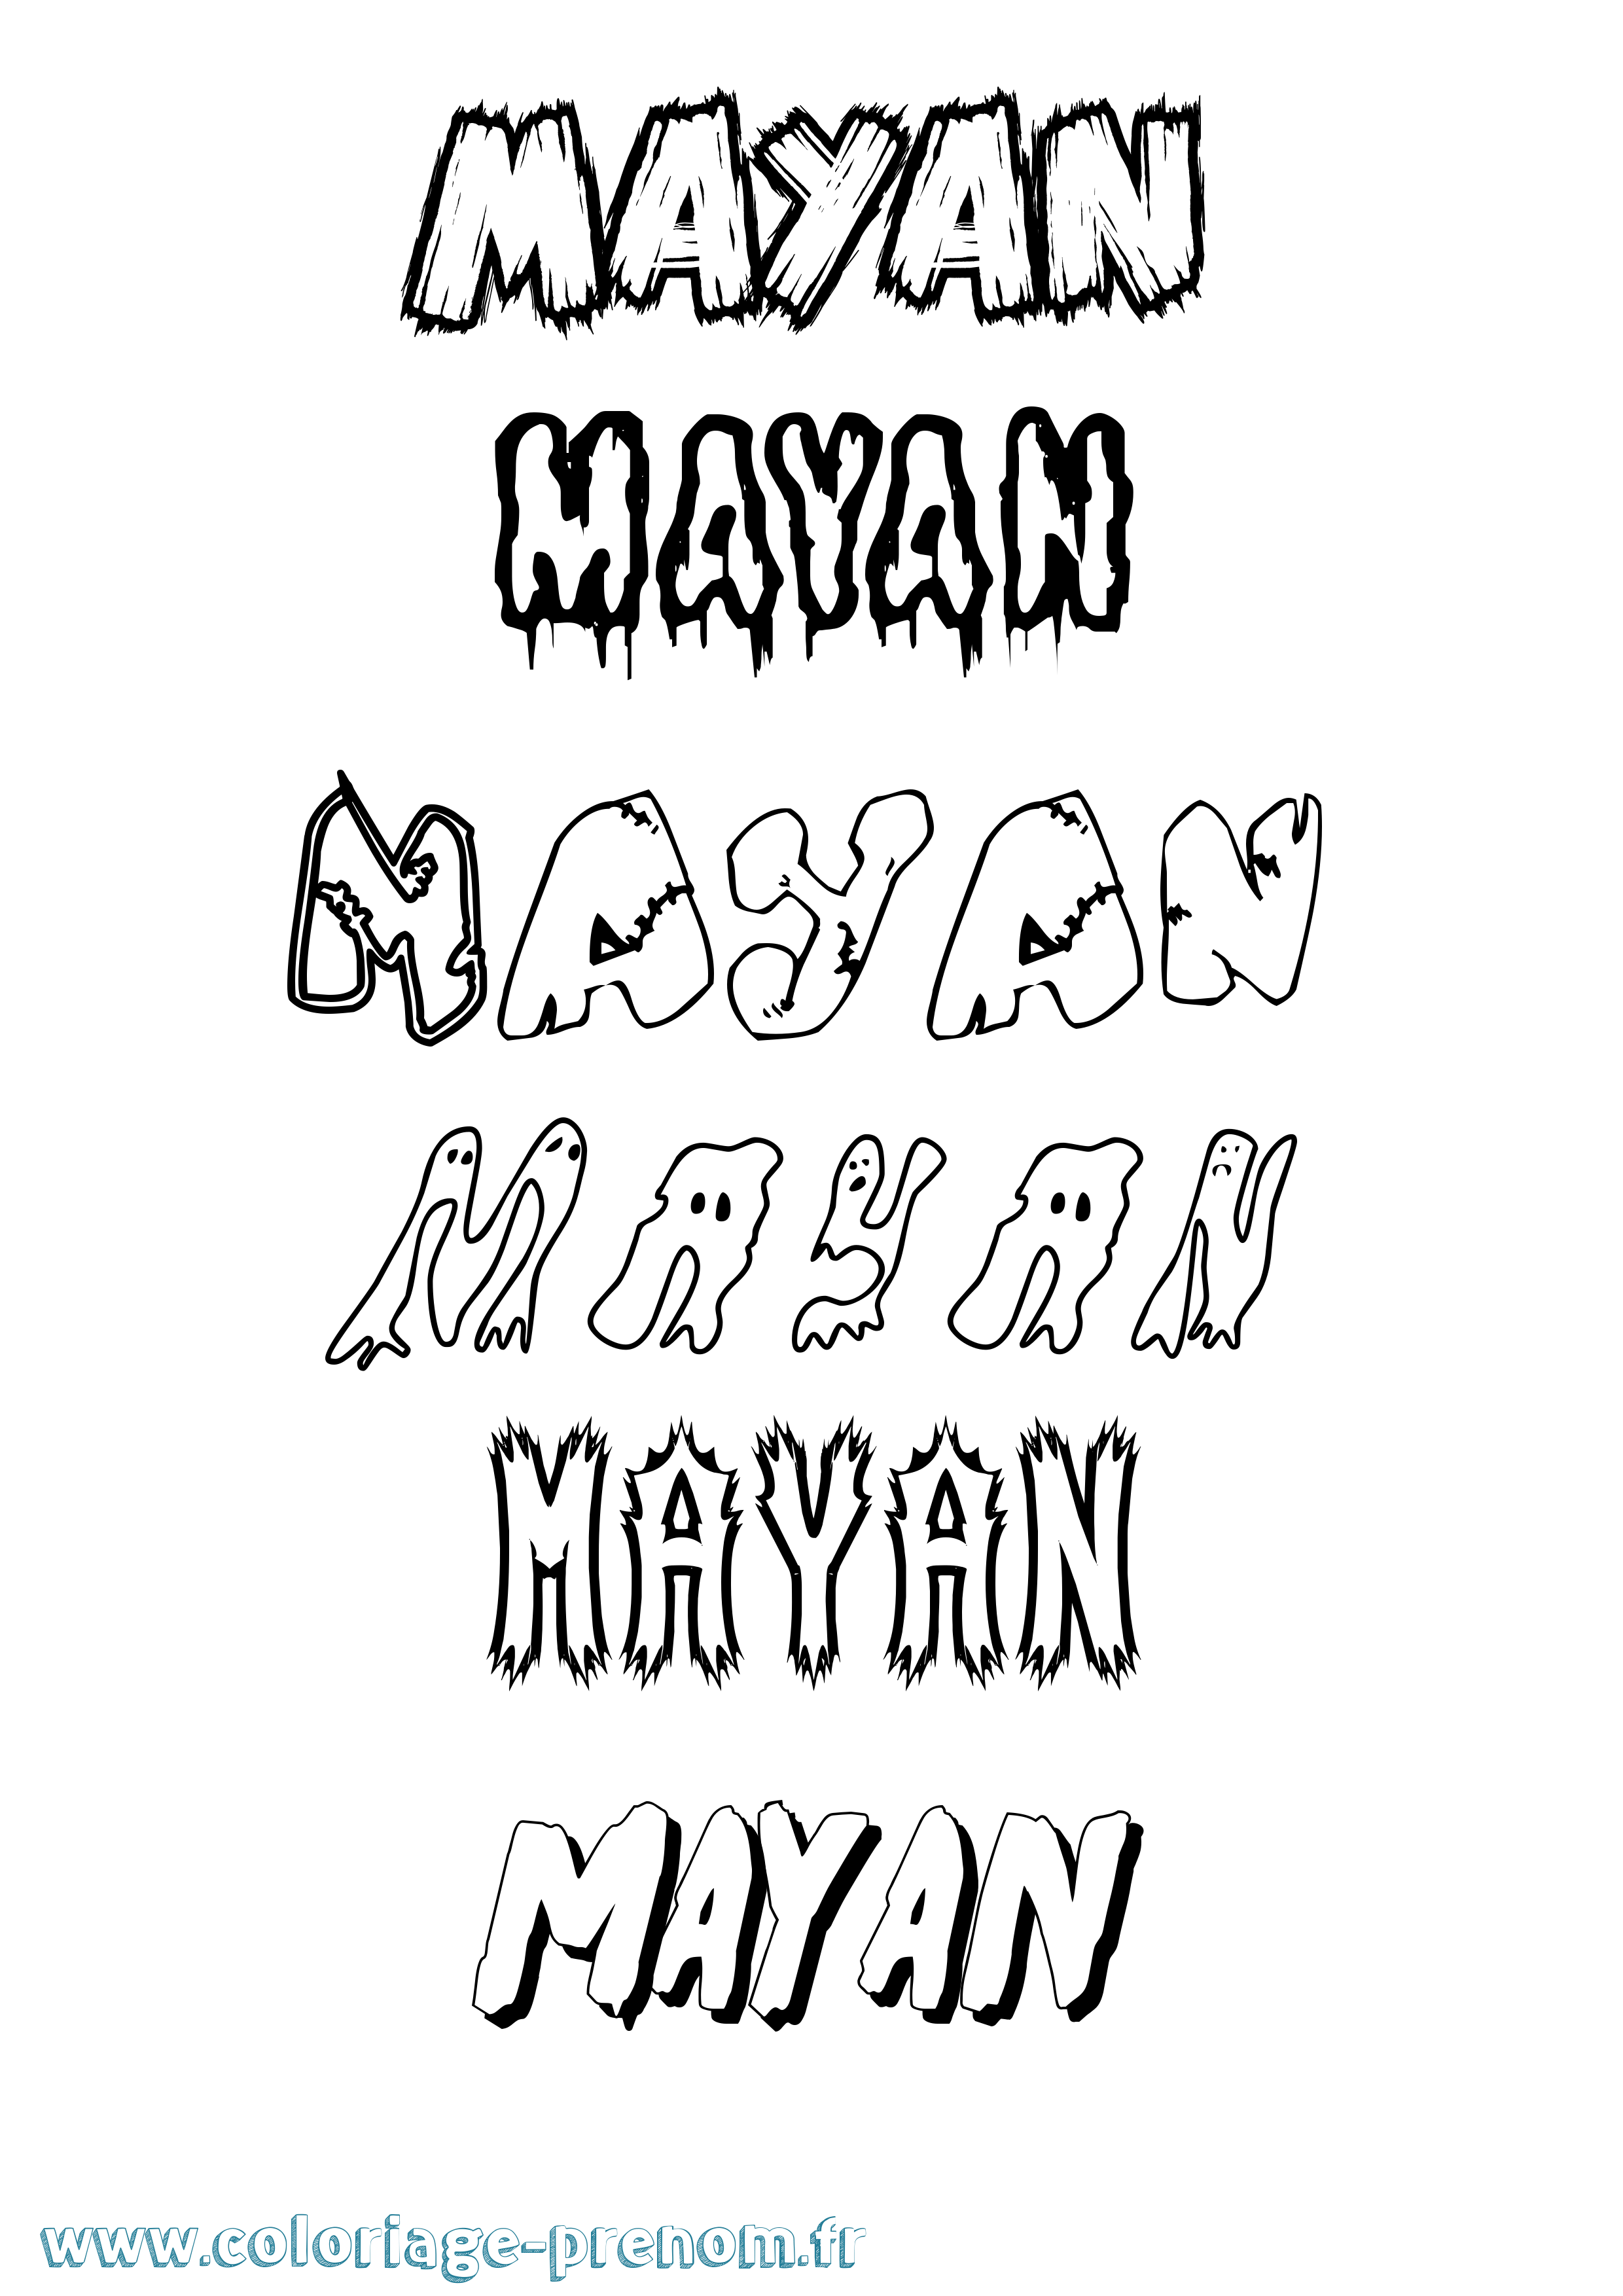 Coloriage prénom Mayan Frisson